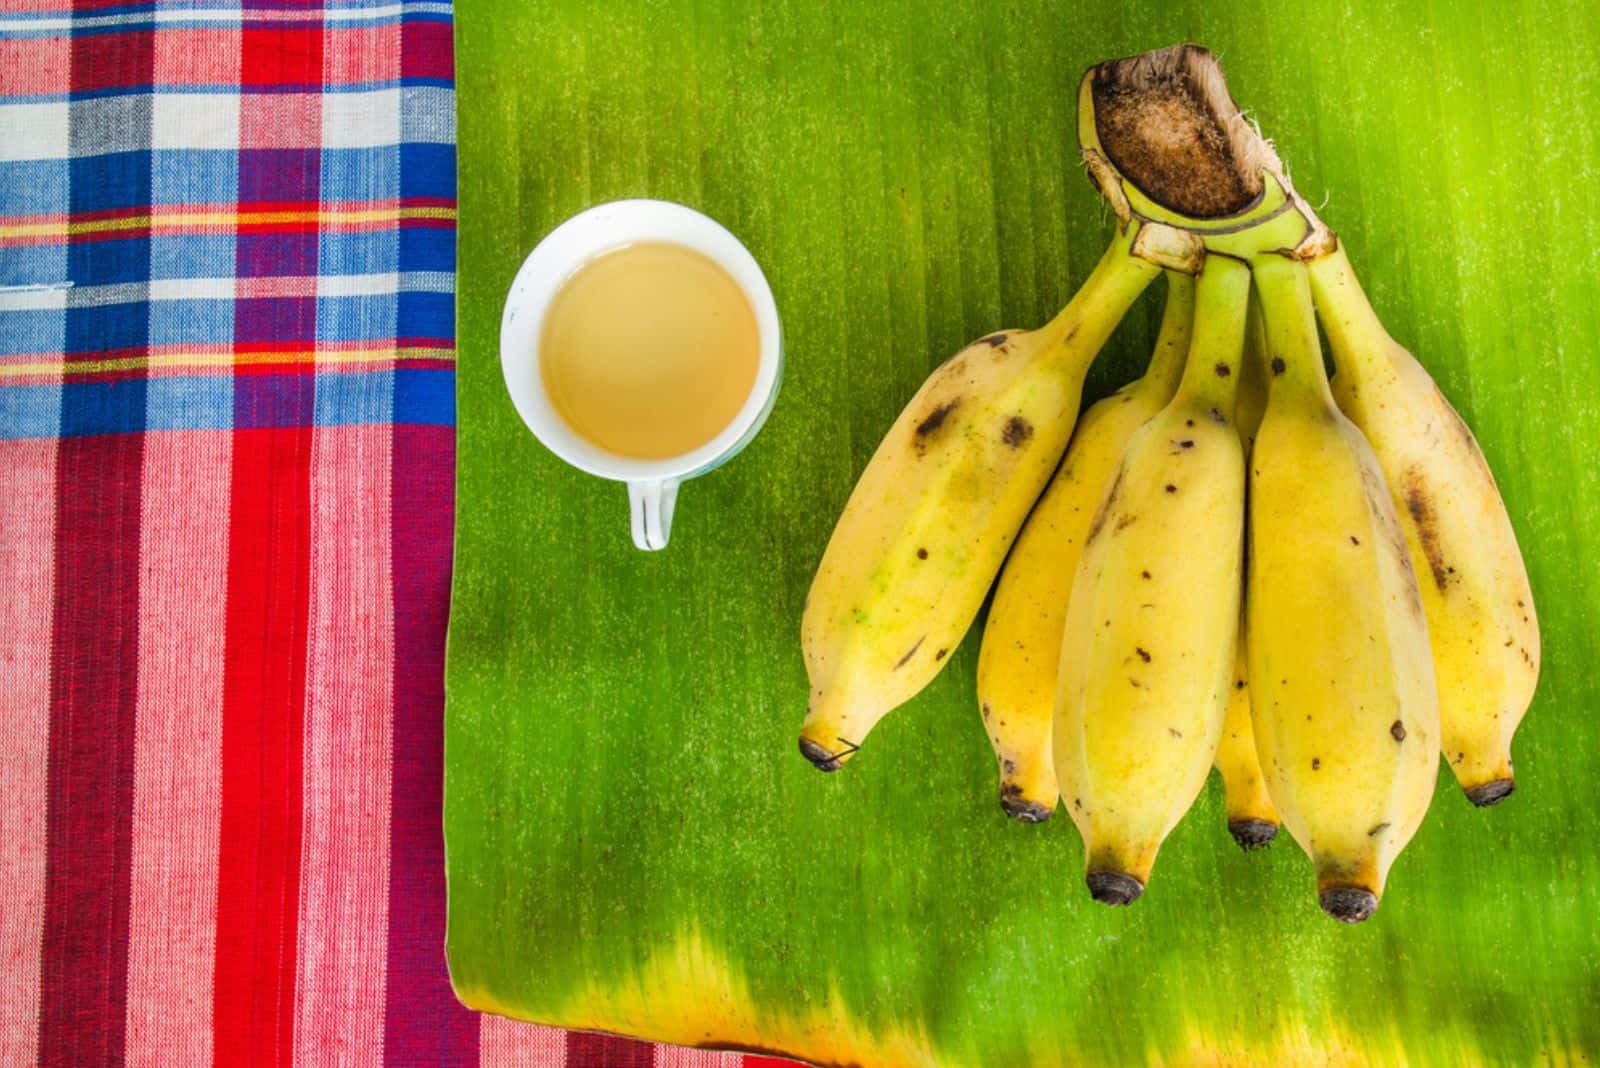 Tea with Bananas on the table